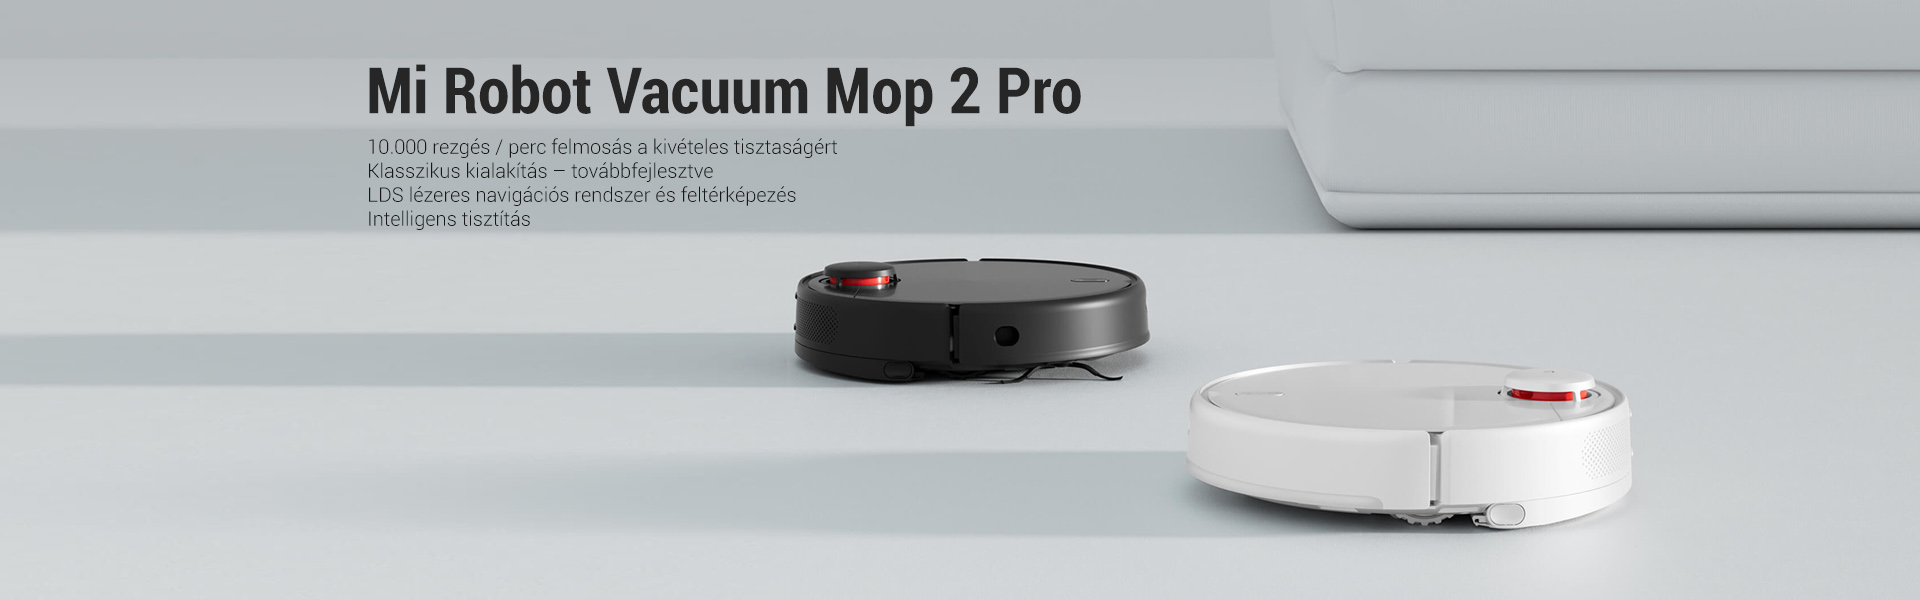 Xiaomi Mi Robot Vacuum Mop 2 Pro robotporszívó